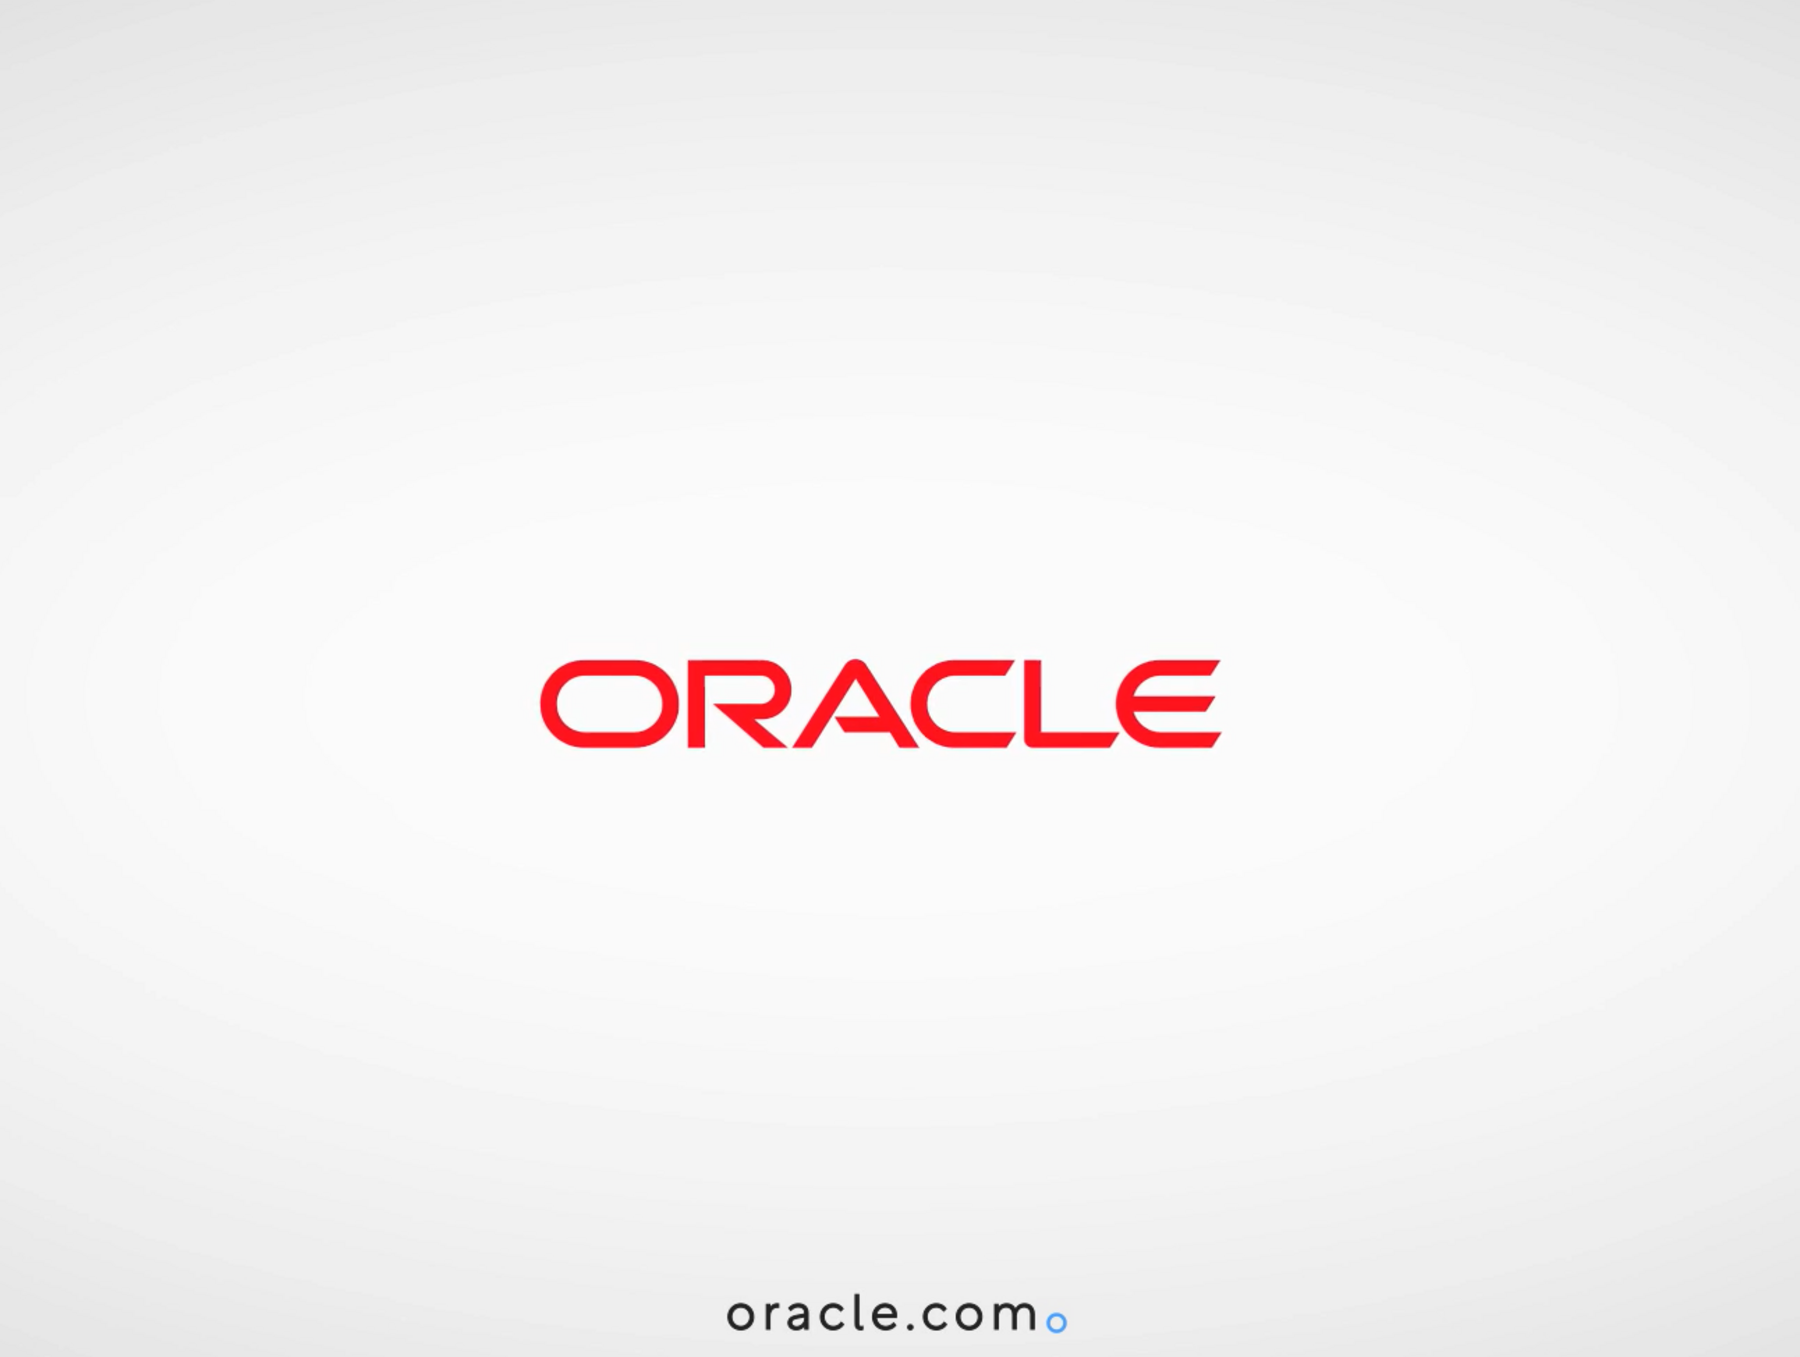 Oracle sql developer logo - ulsdcommunity